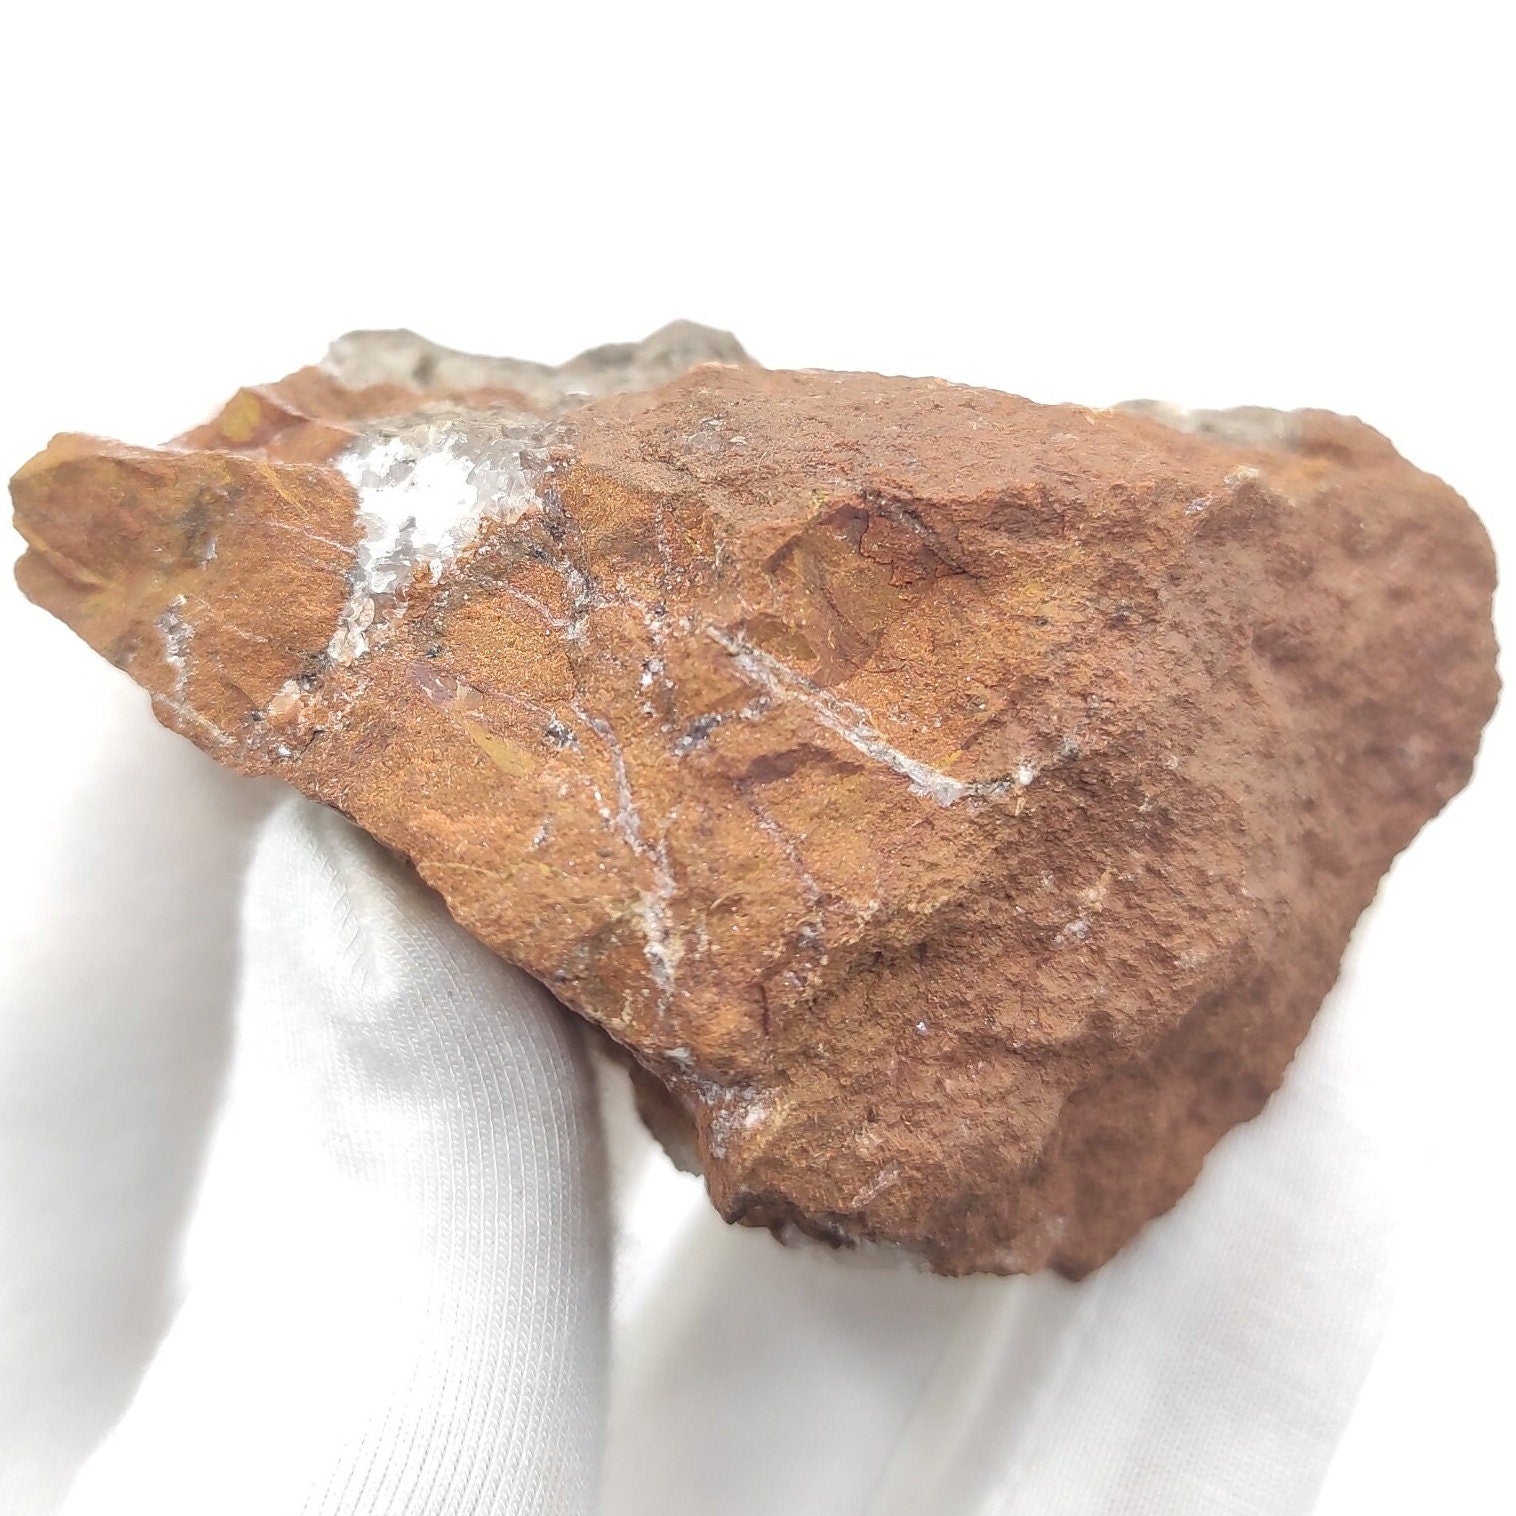 133g UV Reactive Calcite - Phosphorescent Calcite Specimen - Cambridge Cove, Nova Scotia, Canada - UV Minerals - Minerals with Afterglow